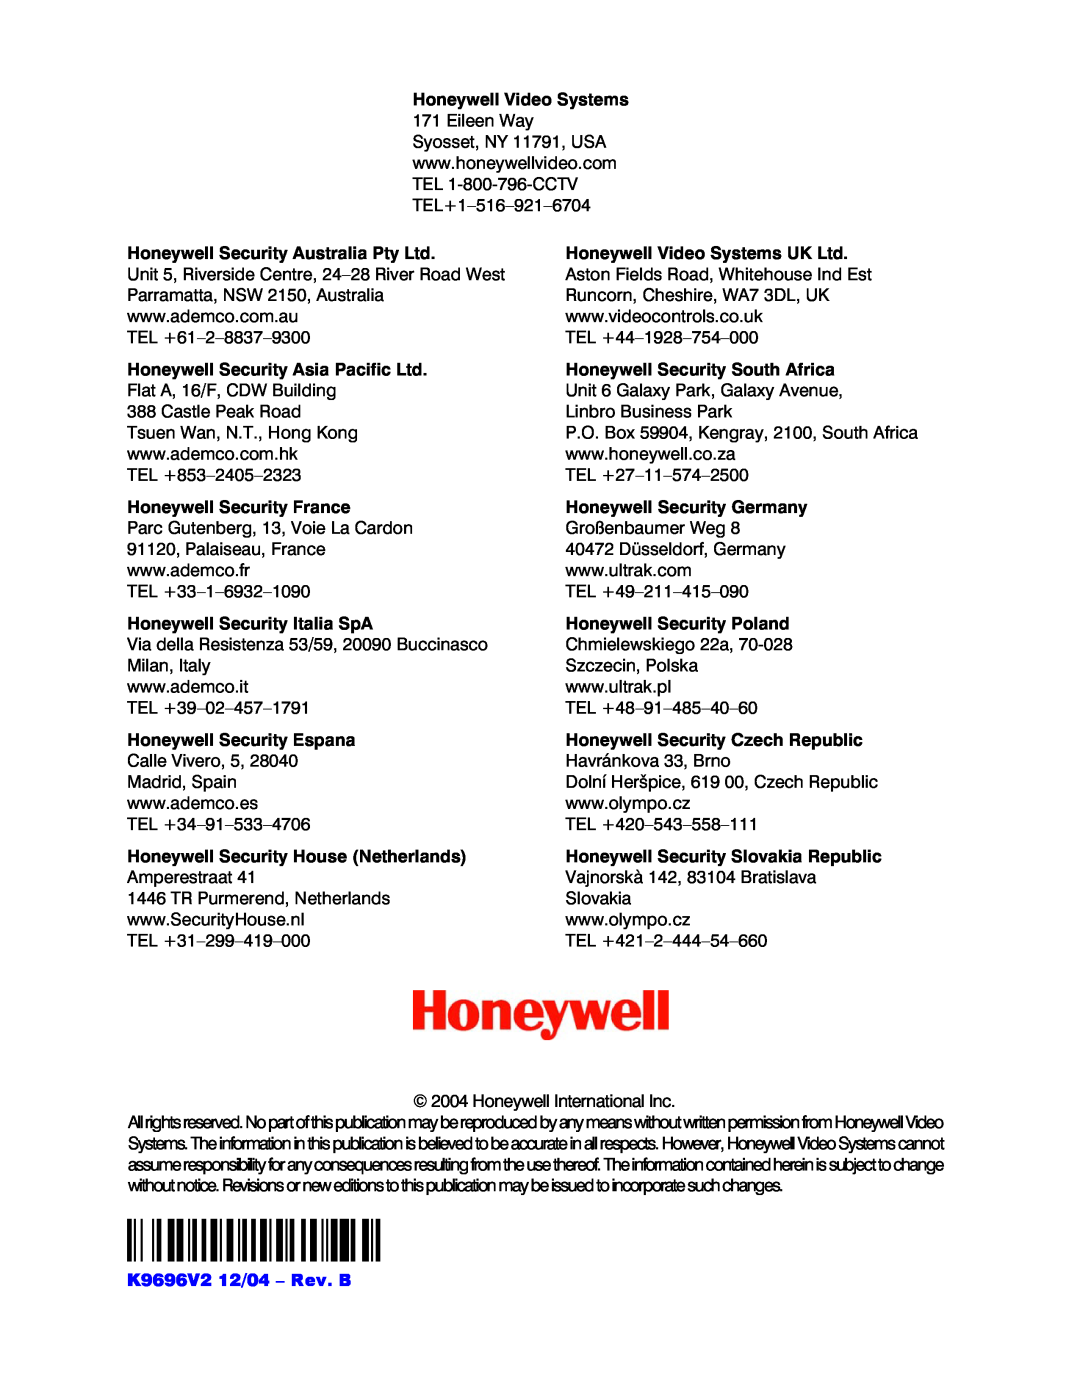 Honeywell K9696V2 Honeywell Security Australia Pty Ltd, Honeywell Security Asia Pacific Ltd, Honeywell Security France 